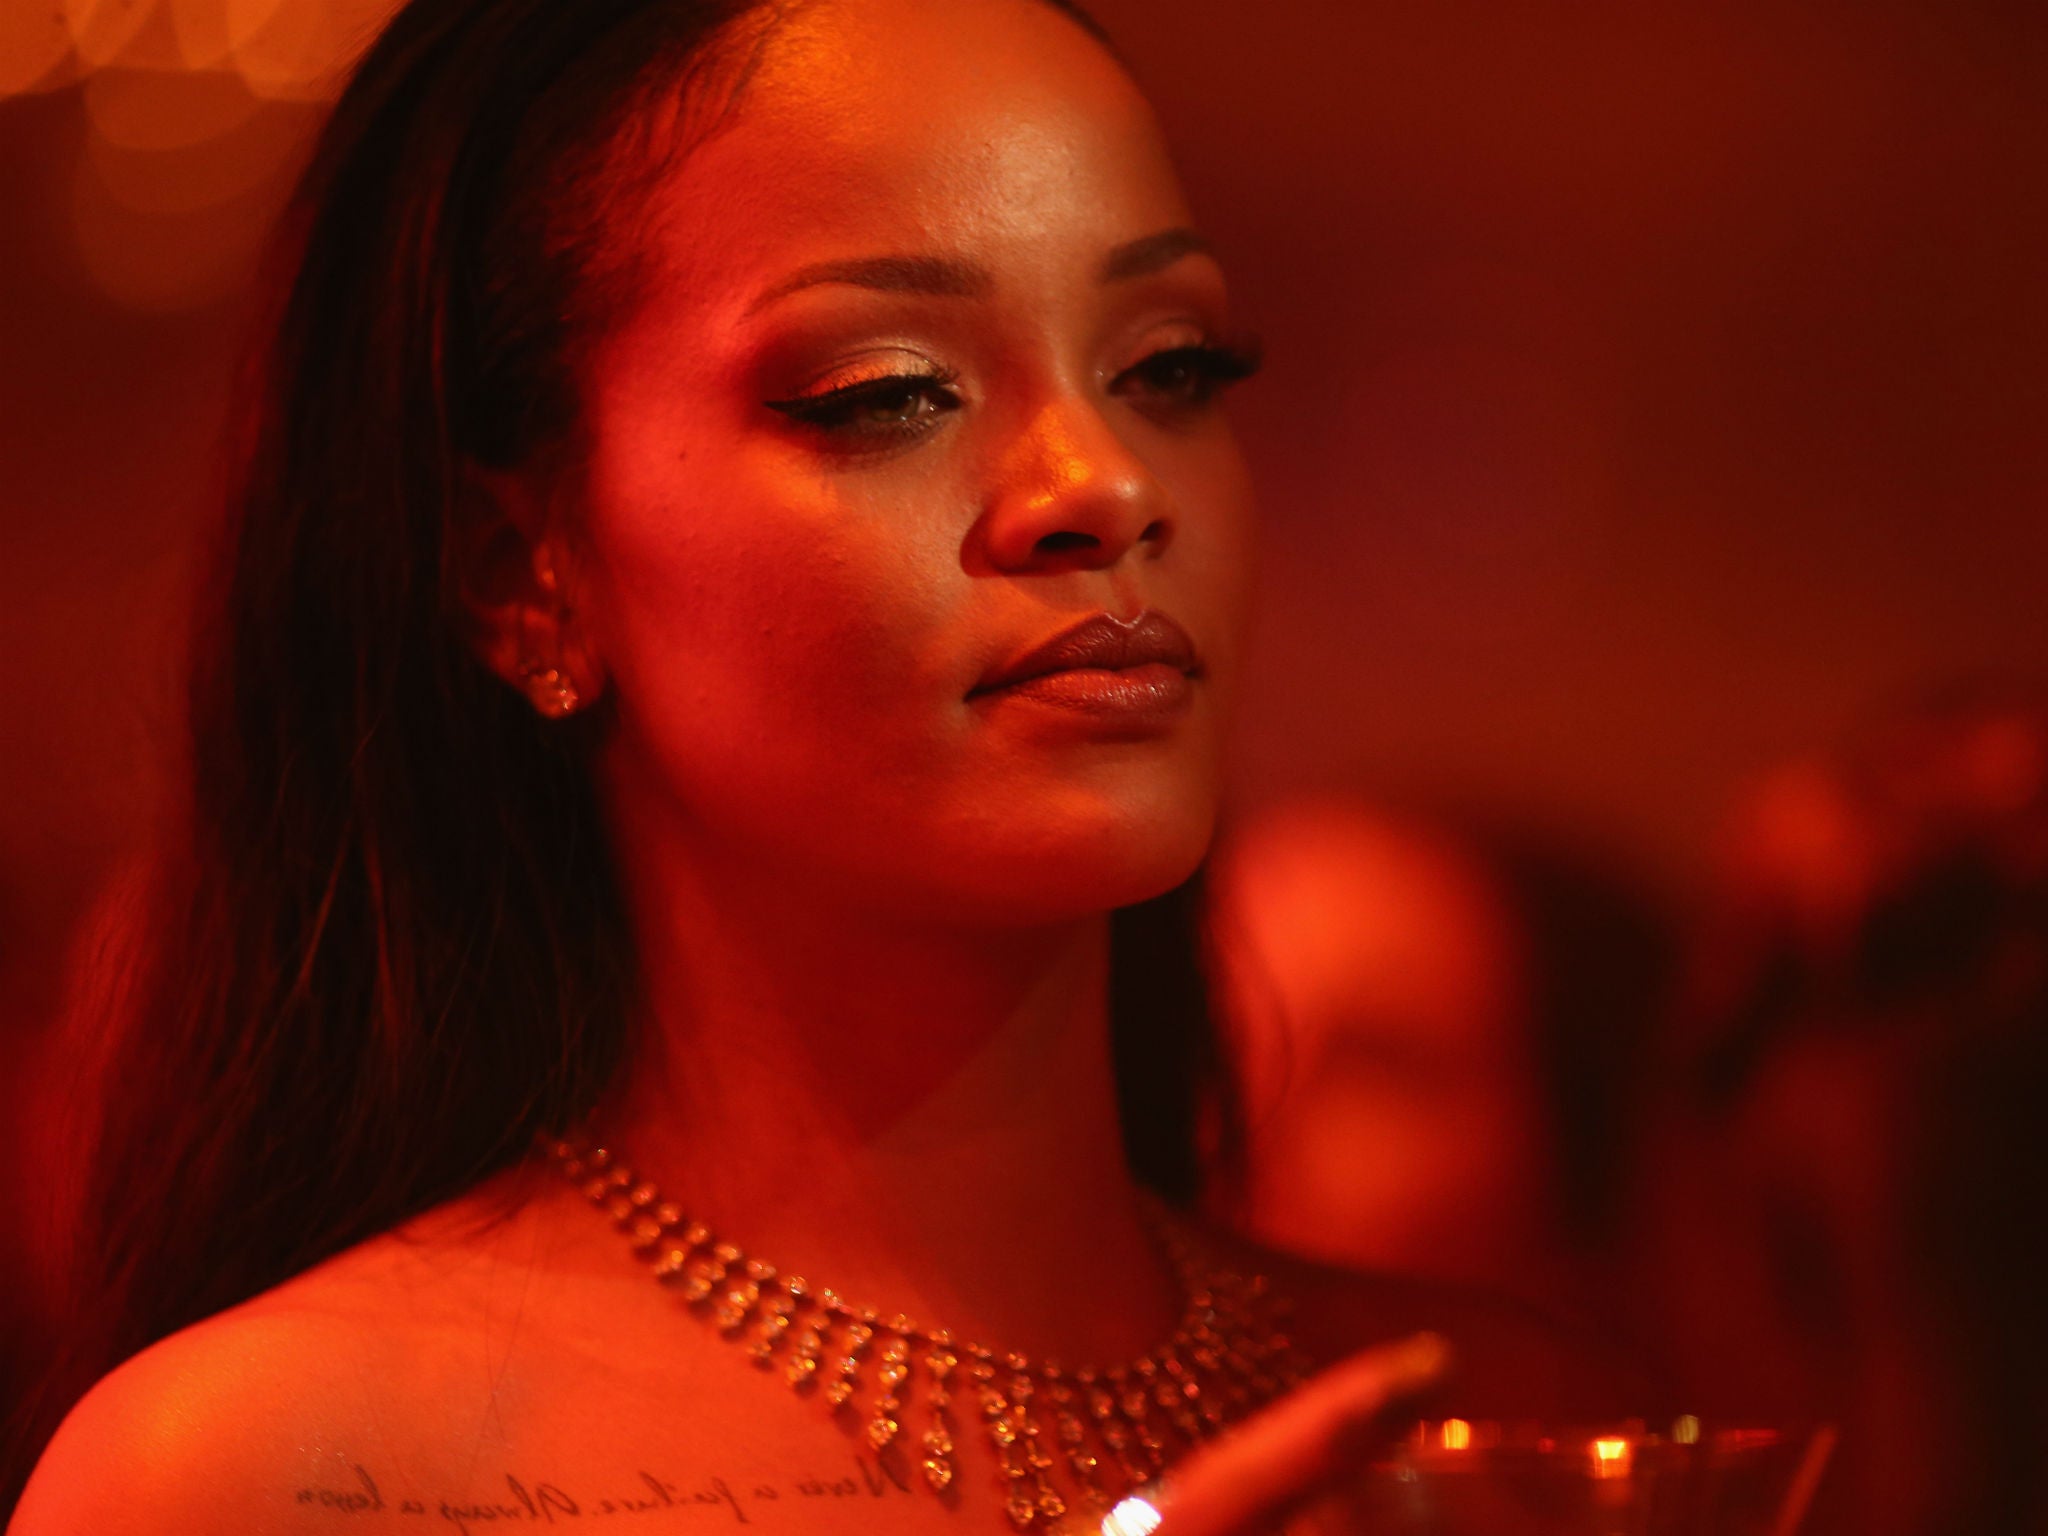 Rihanna released her eighth studio album, Anti, on 28 January